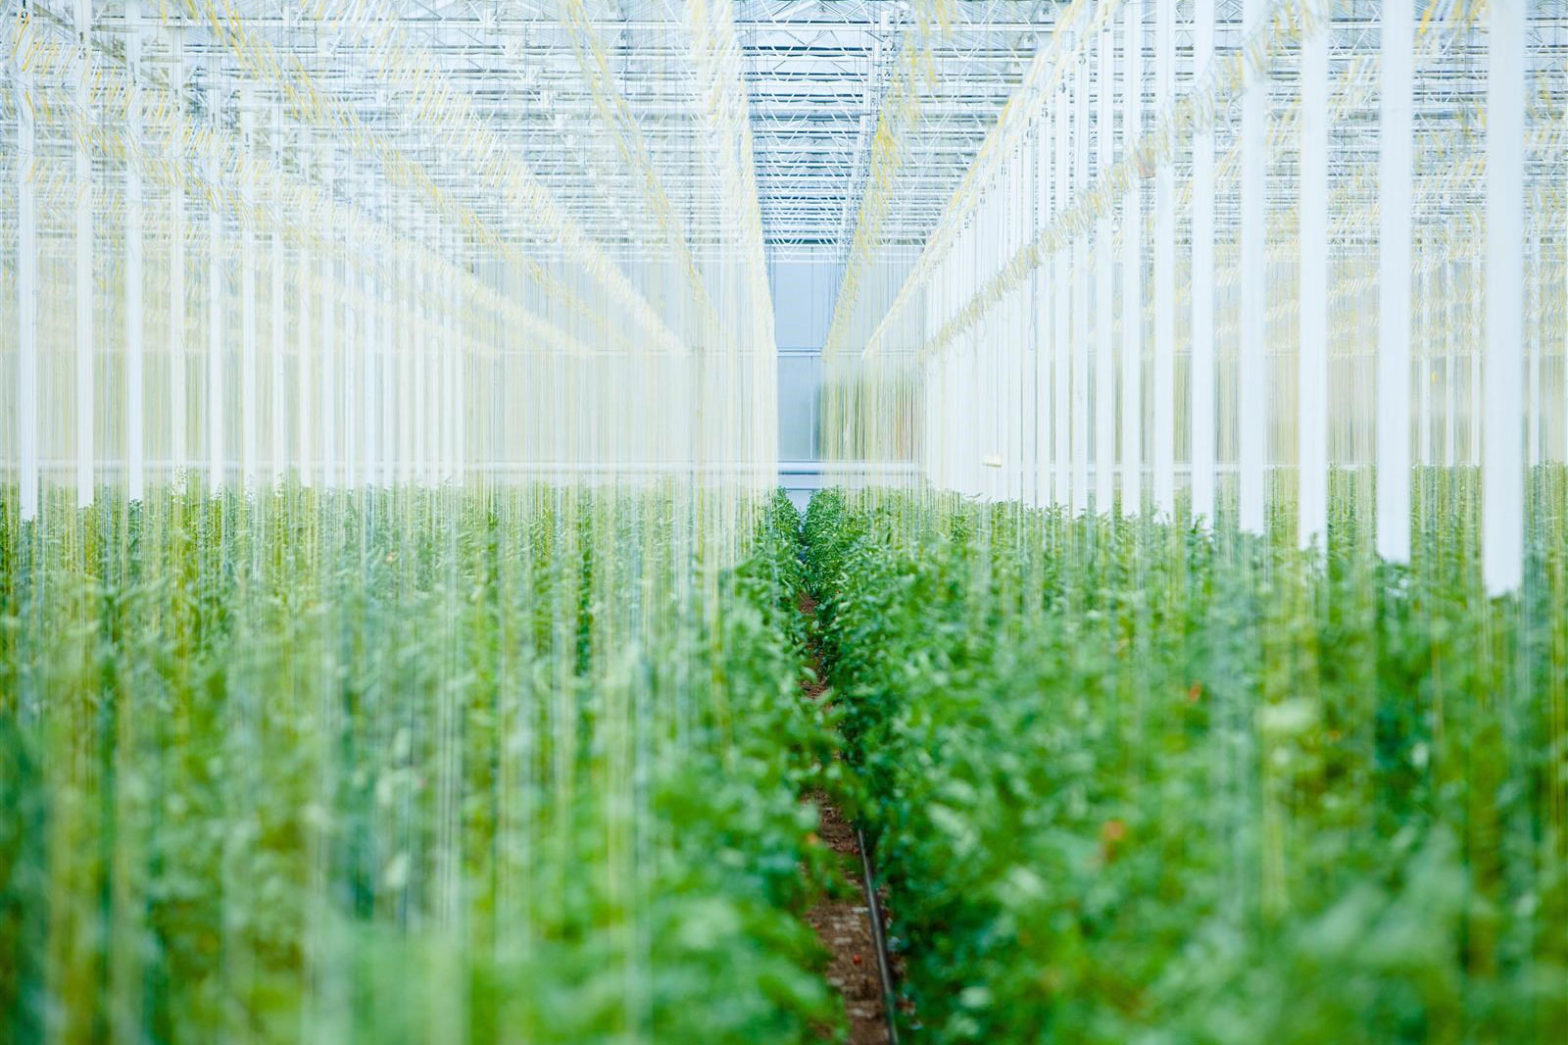 Stor tomatodling byggs nära stort pappersbruk